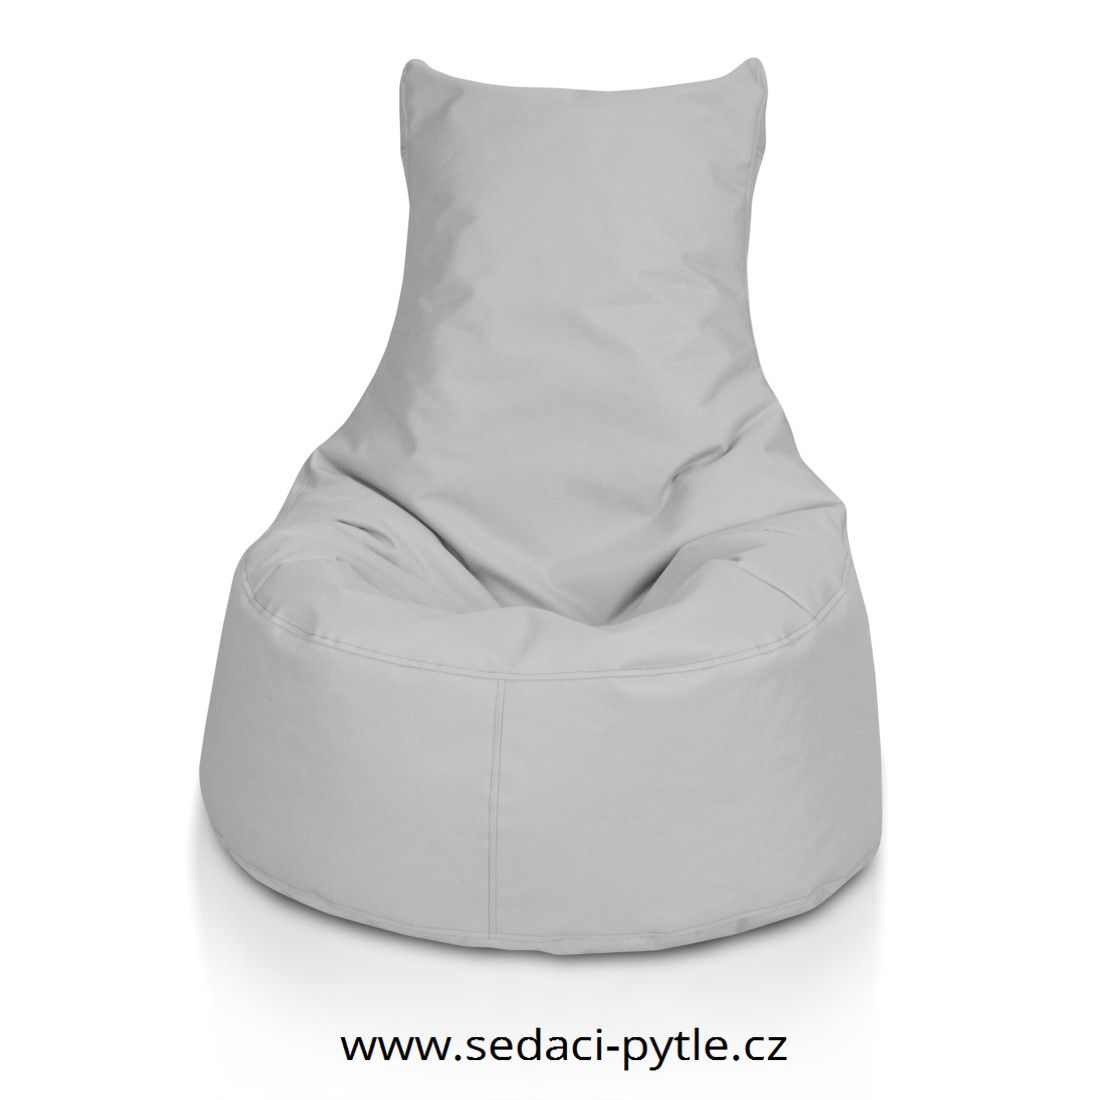 Primabag Seat polyester NC šedá - Sedaci-Pytle.cz